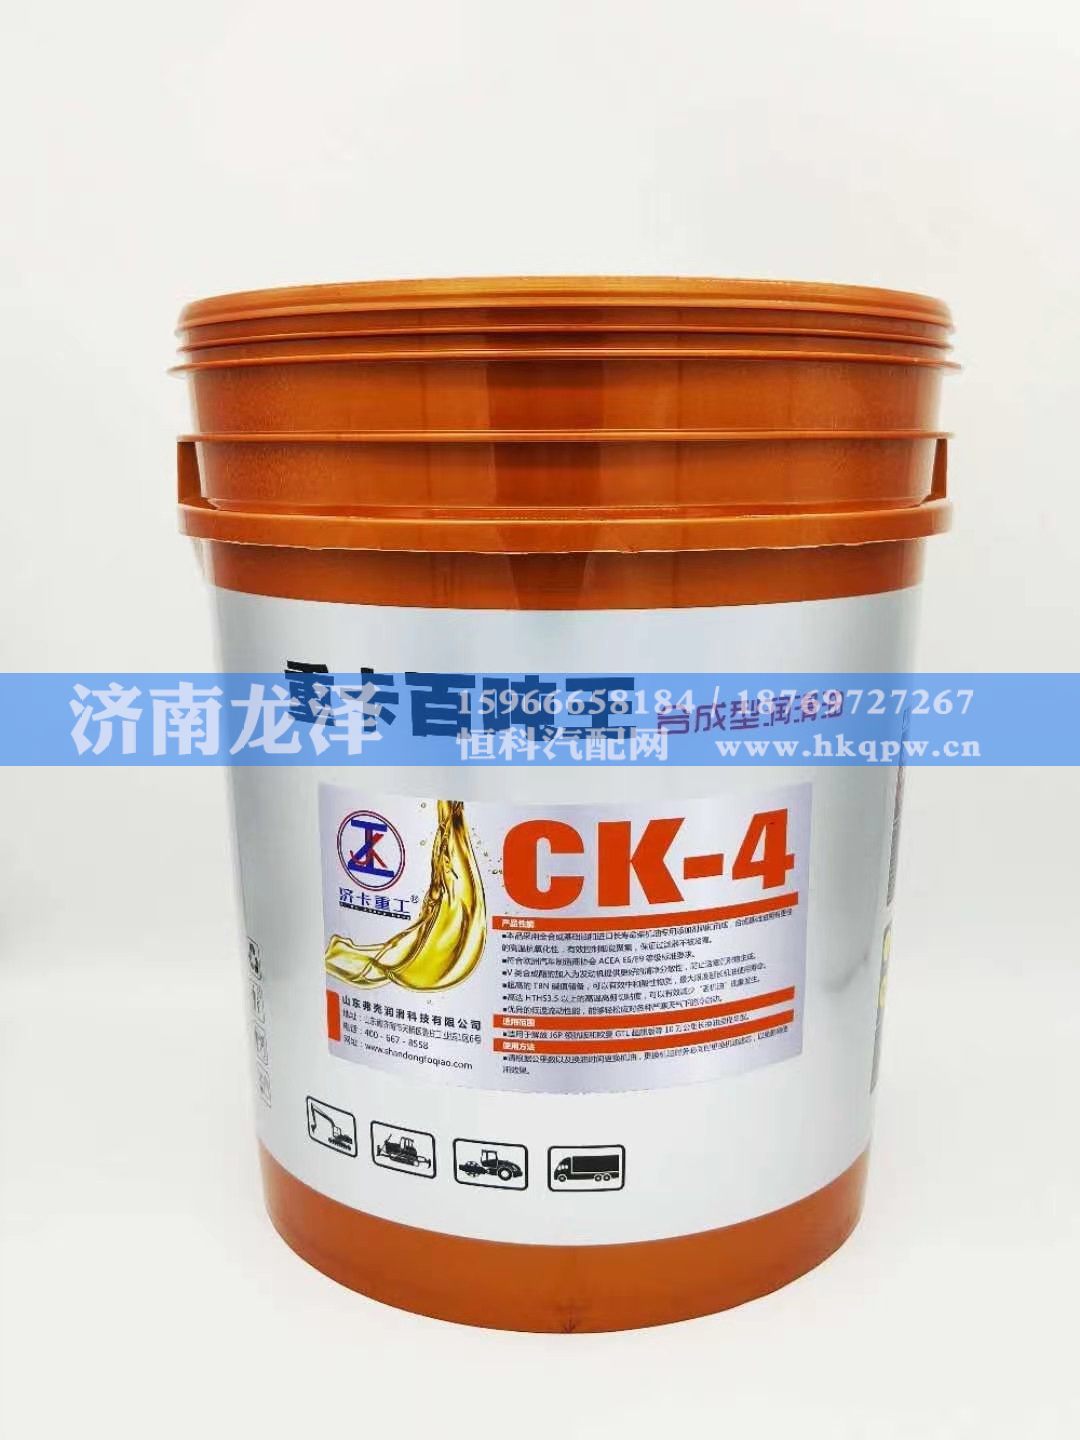 CK-4,合成型润滑油,山东弗壳润滑科技有限公司